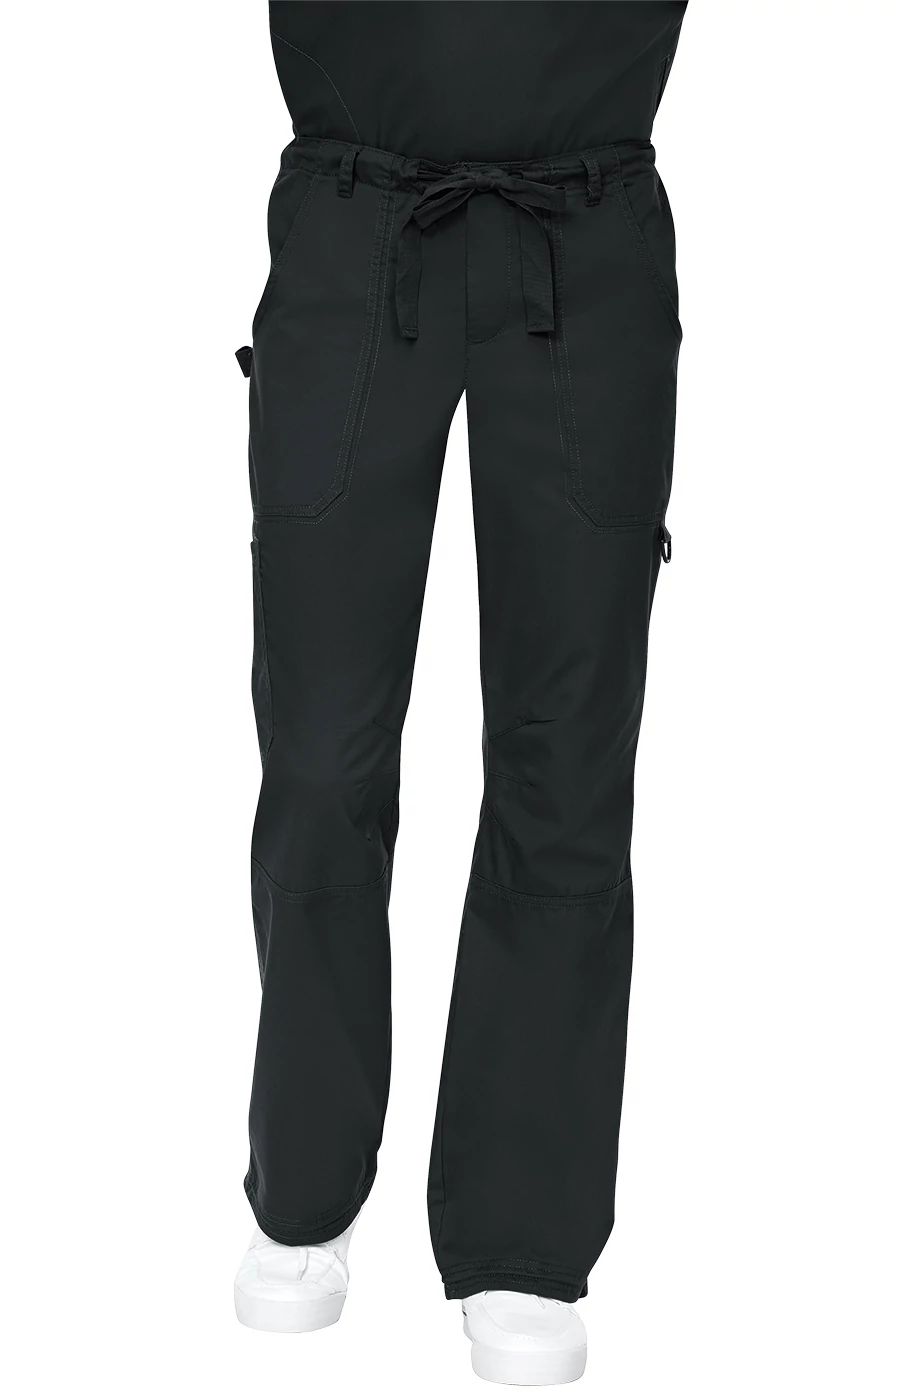 Black Cargo Pants for Women: 6 Stylish Black Cargo Pants for Women